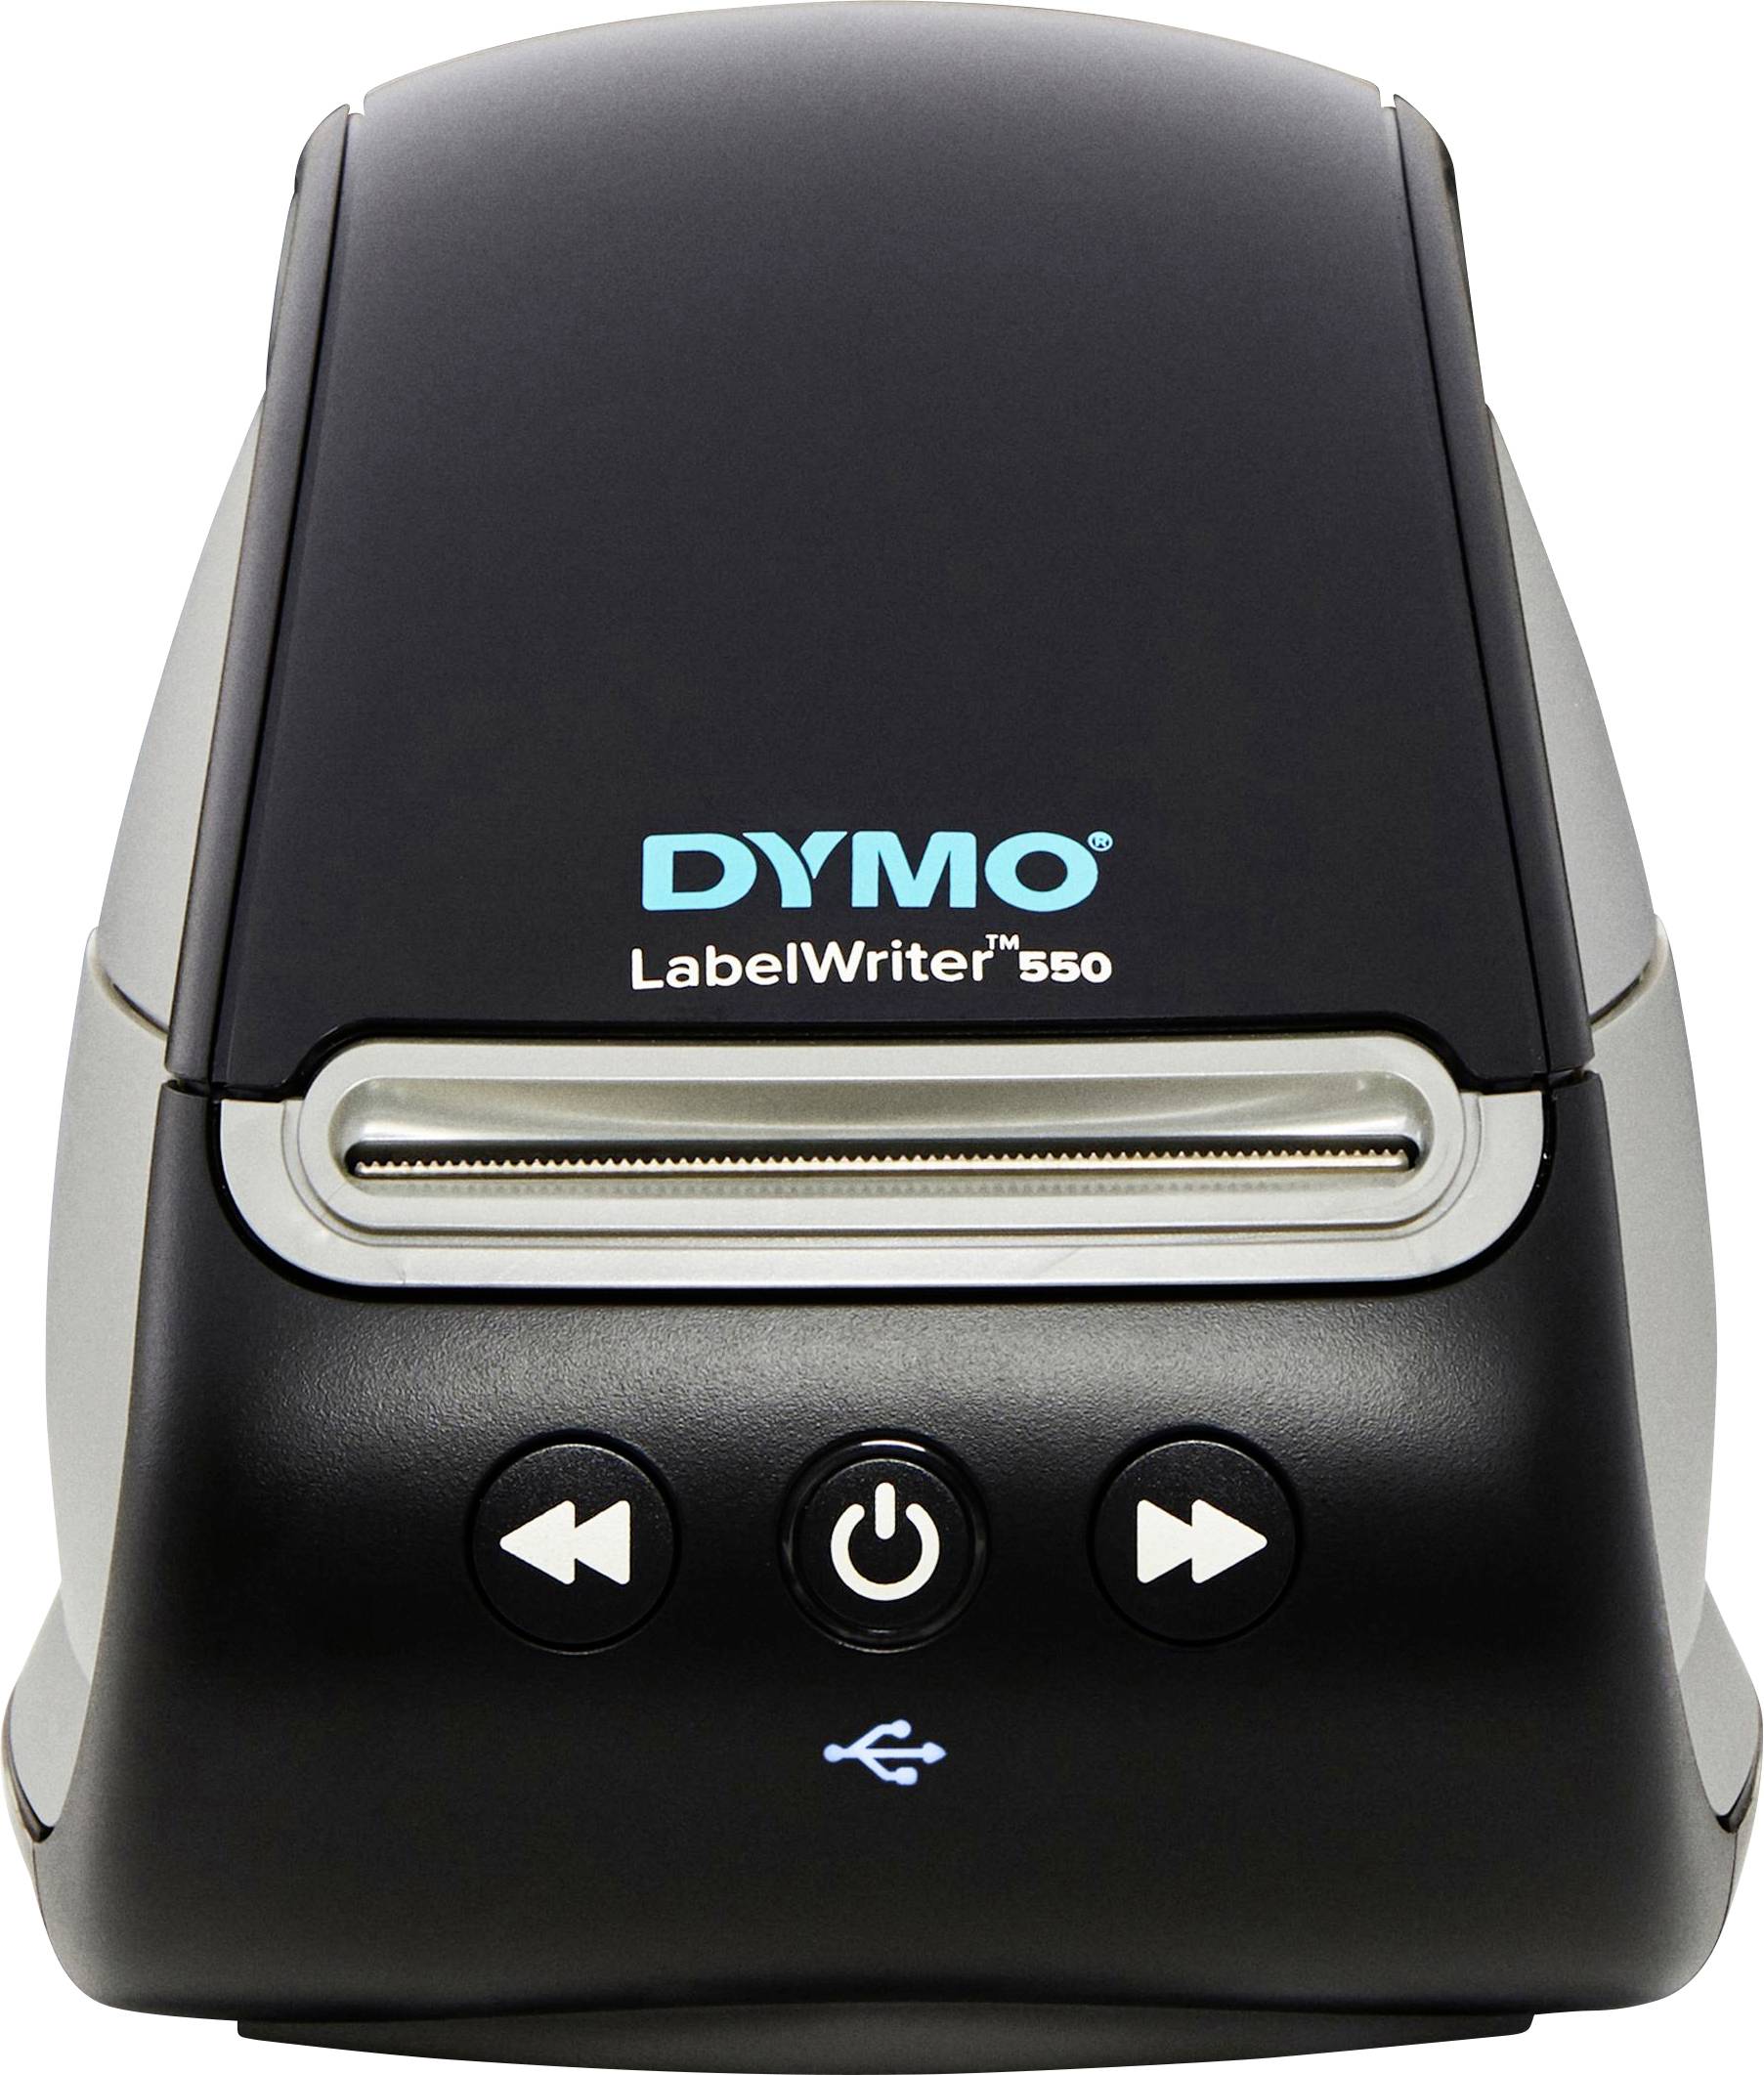 dymo labelwriter 400 software windows 10